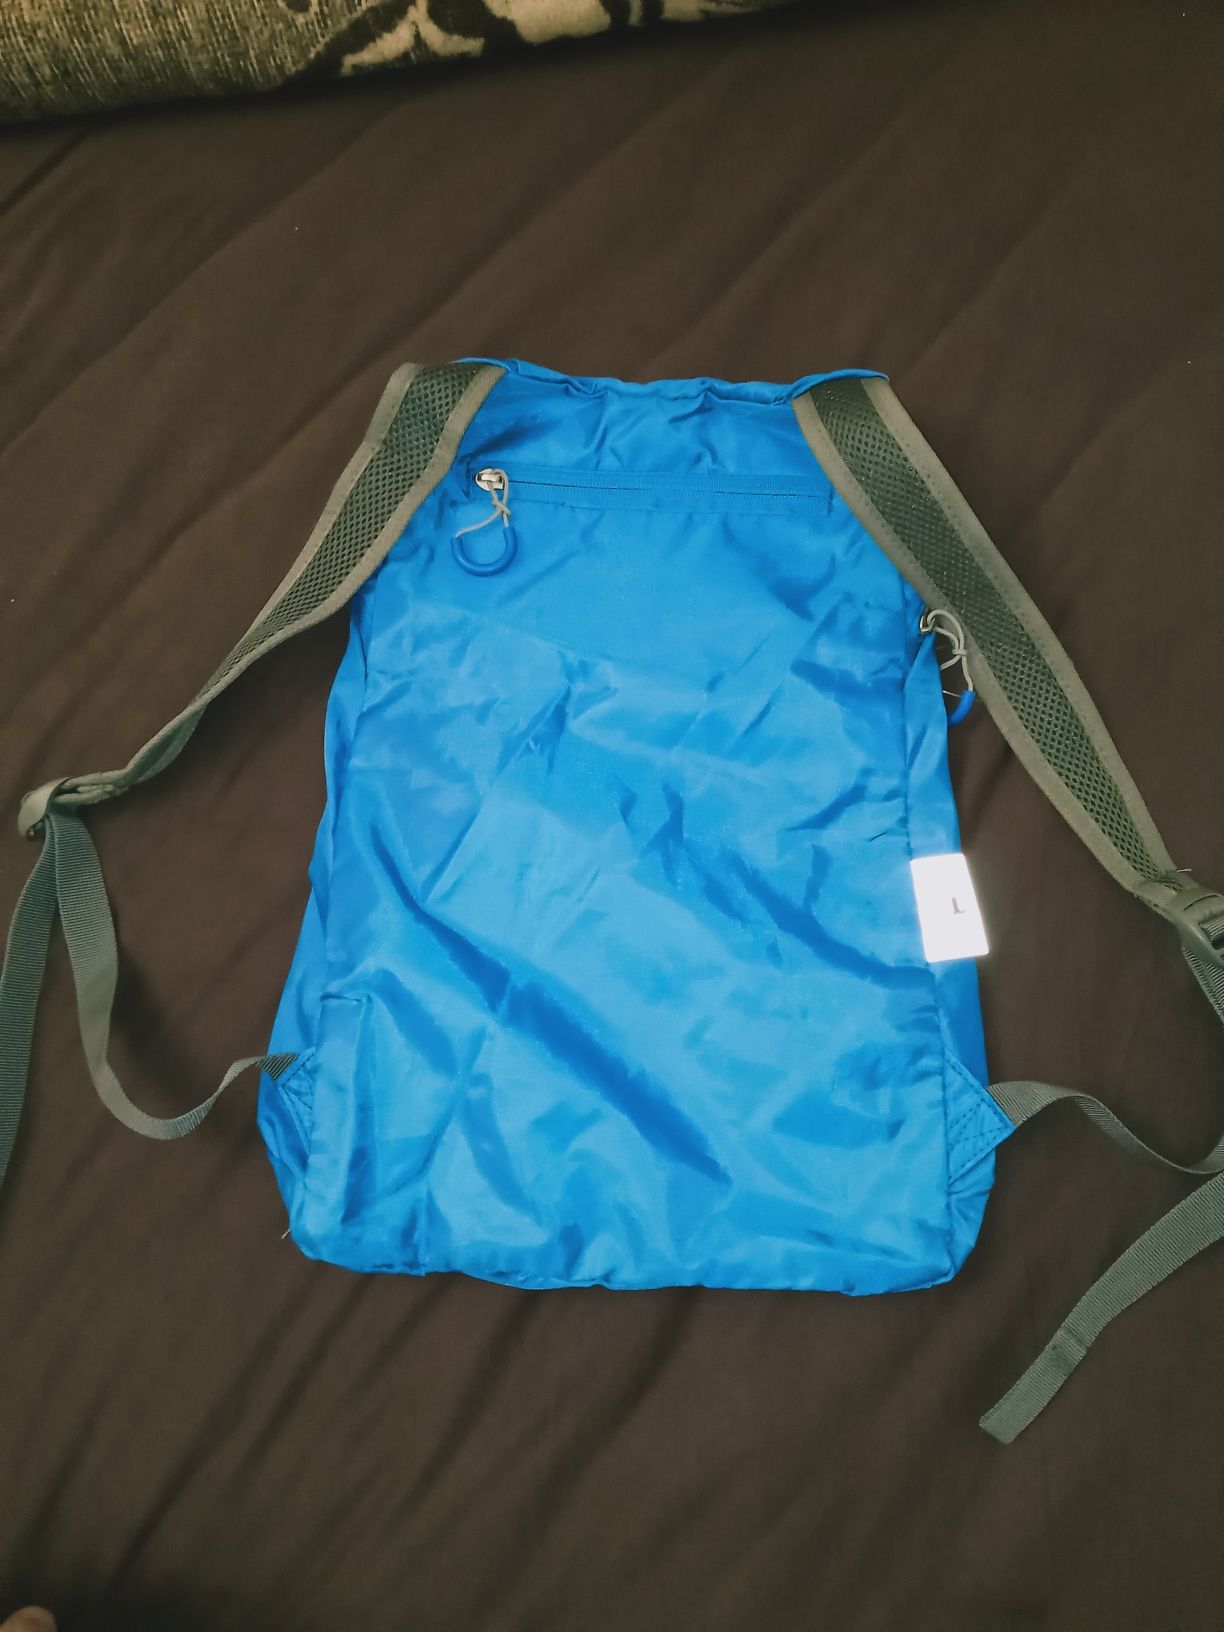 Corvet backpack plecak kompaktowy nowy